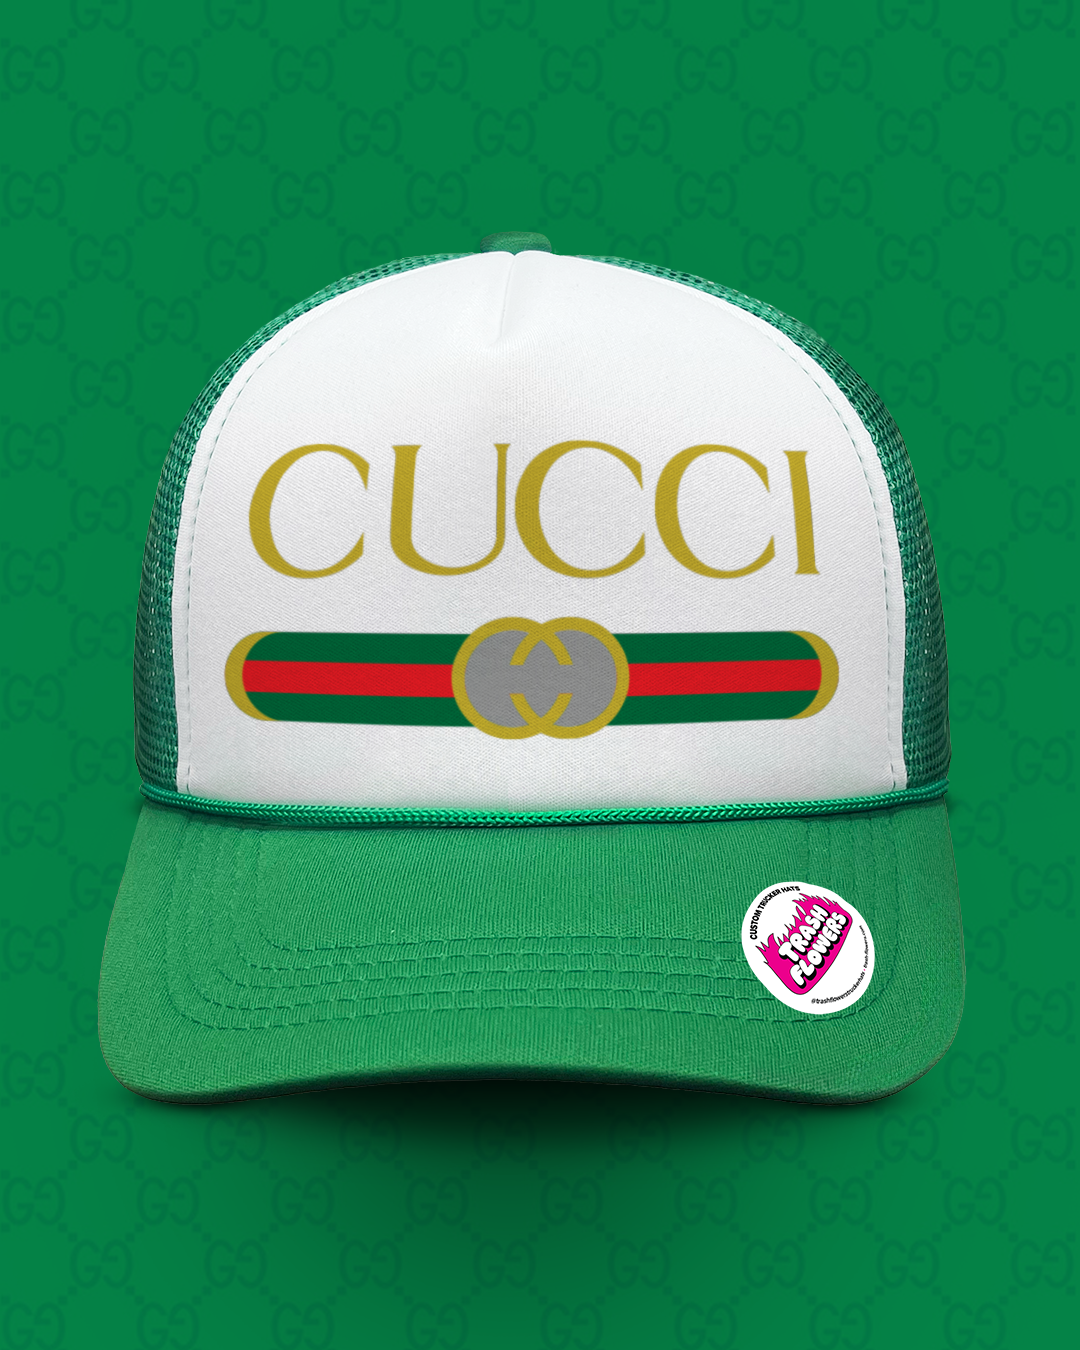 Cucci Trucker Hat